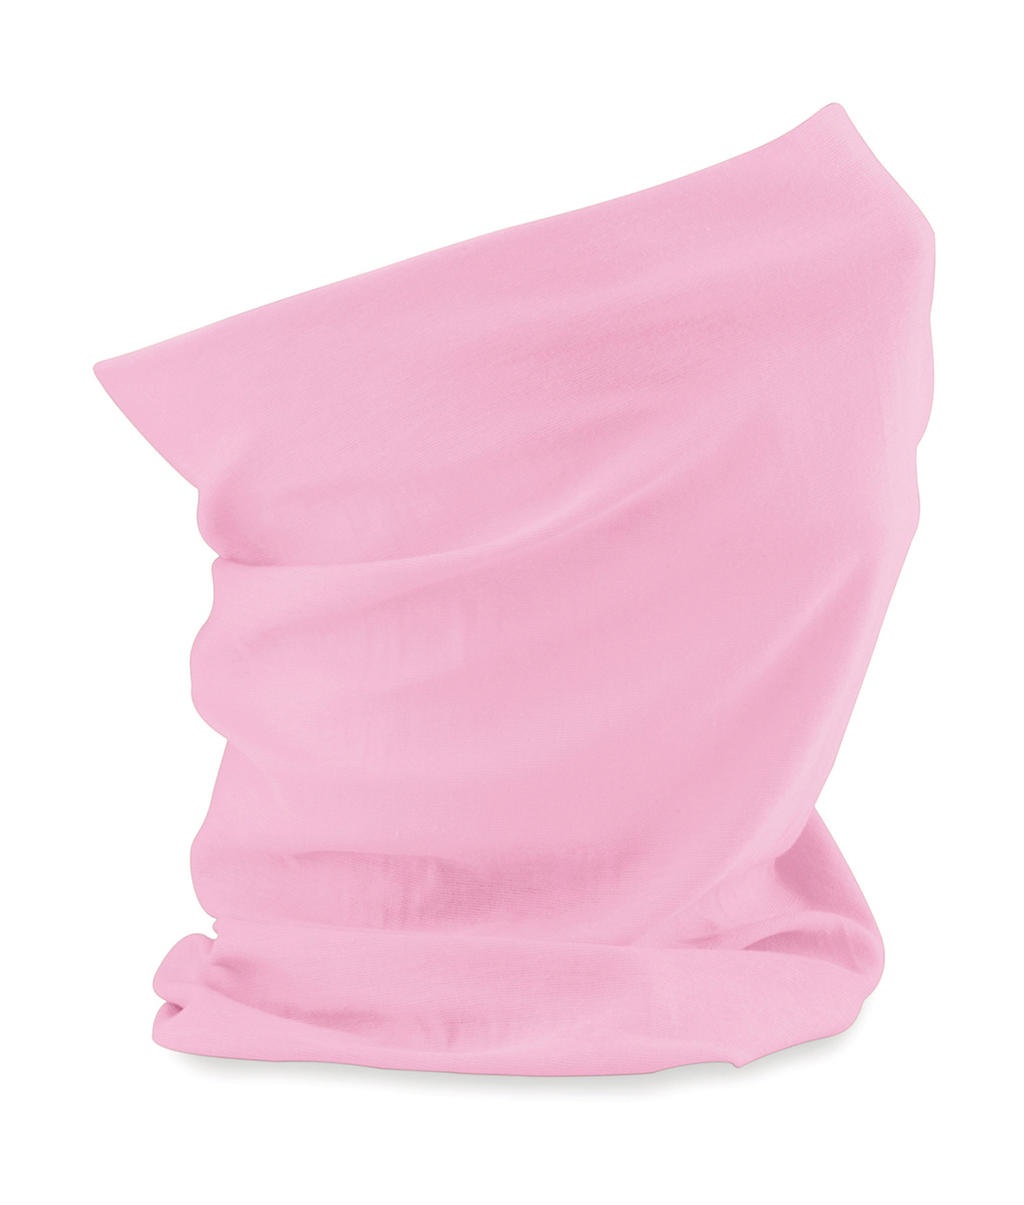  Morf? Premium Anti-Bacterial (3 pack) in Farbe Classic Pink